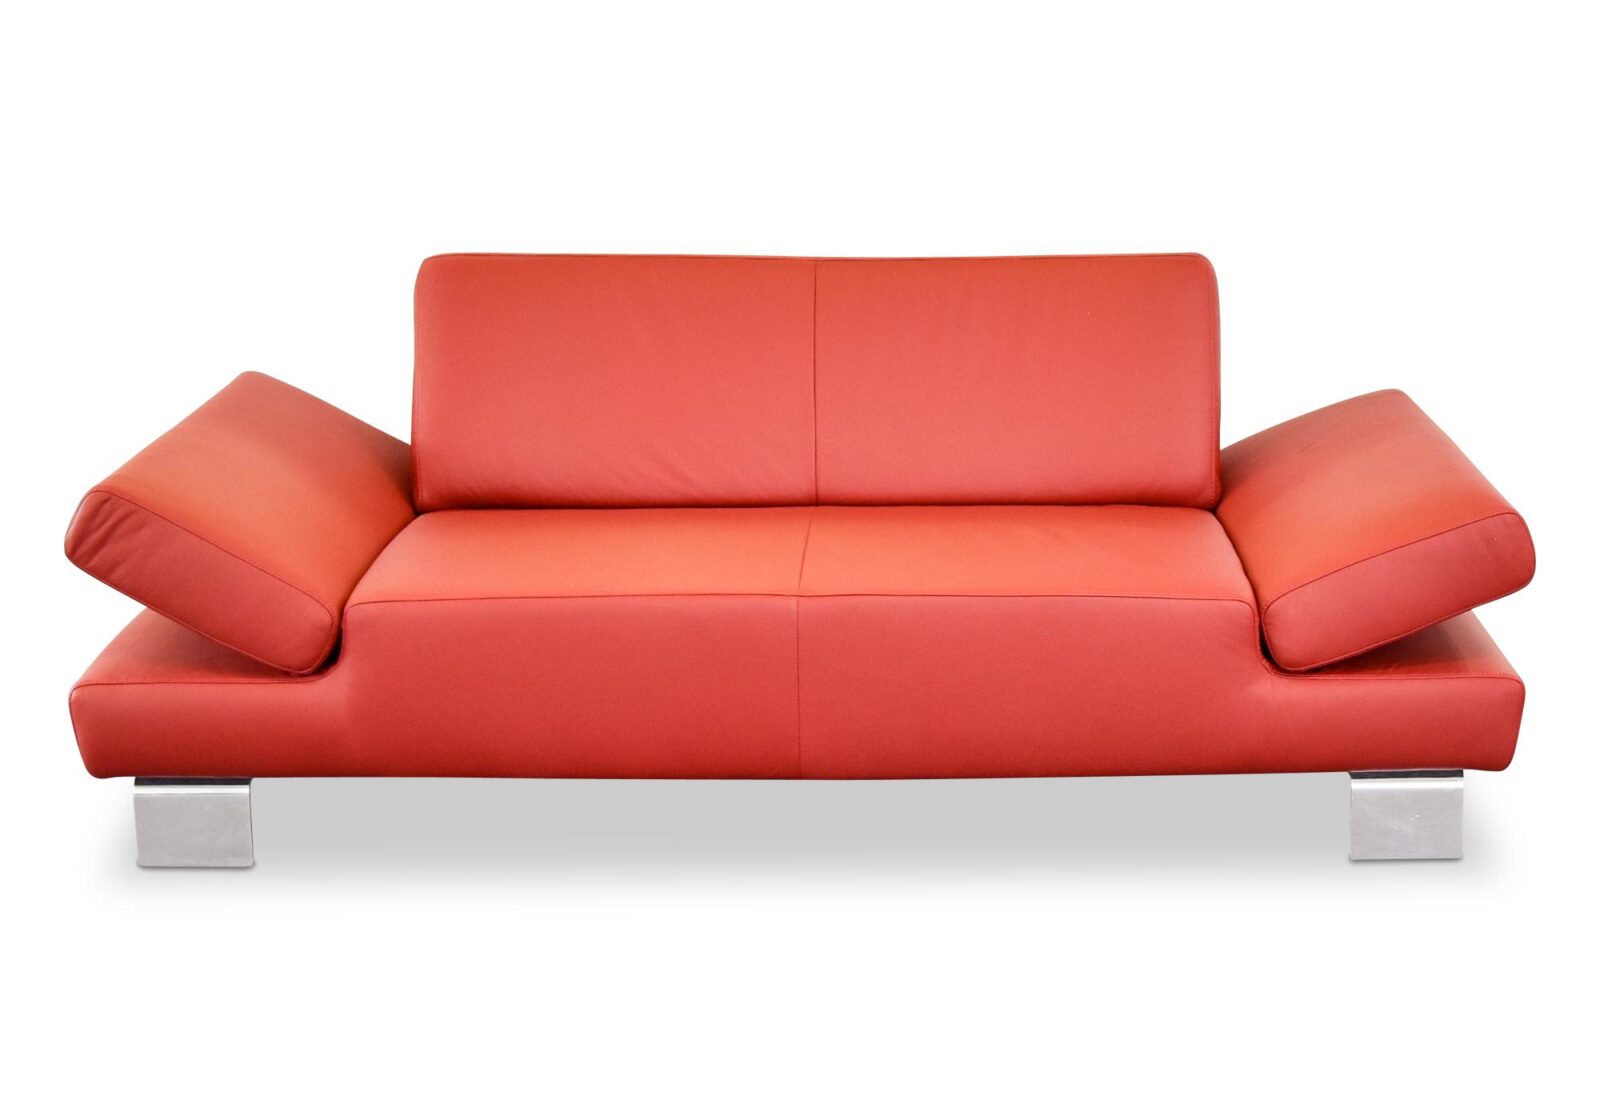 2er Sofa Bonnie  Leder oder Stoff. Bezug: Leder. Farbe: Rot. Erhältlich bei Möbel Gallati.